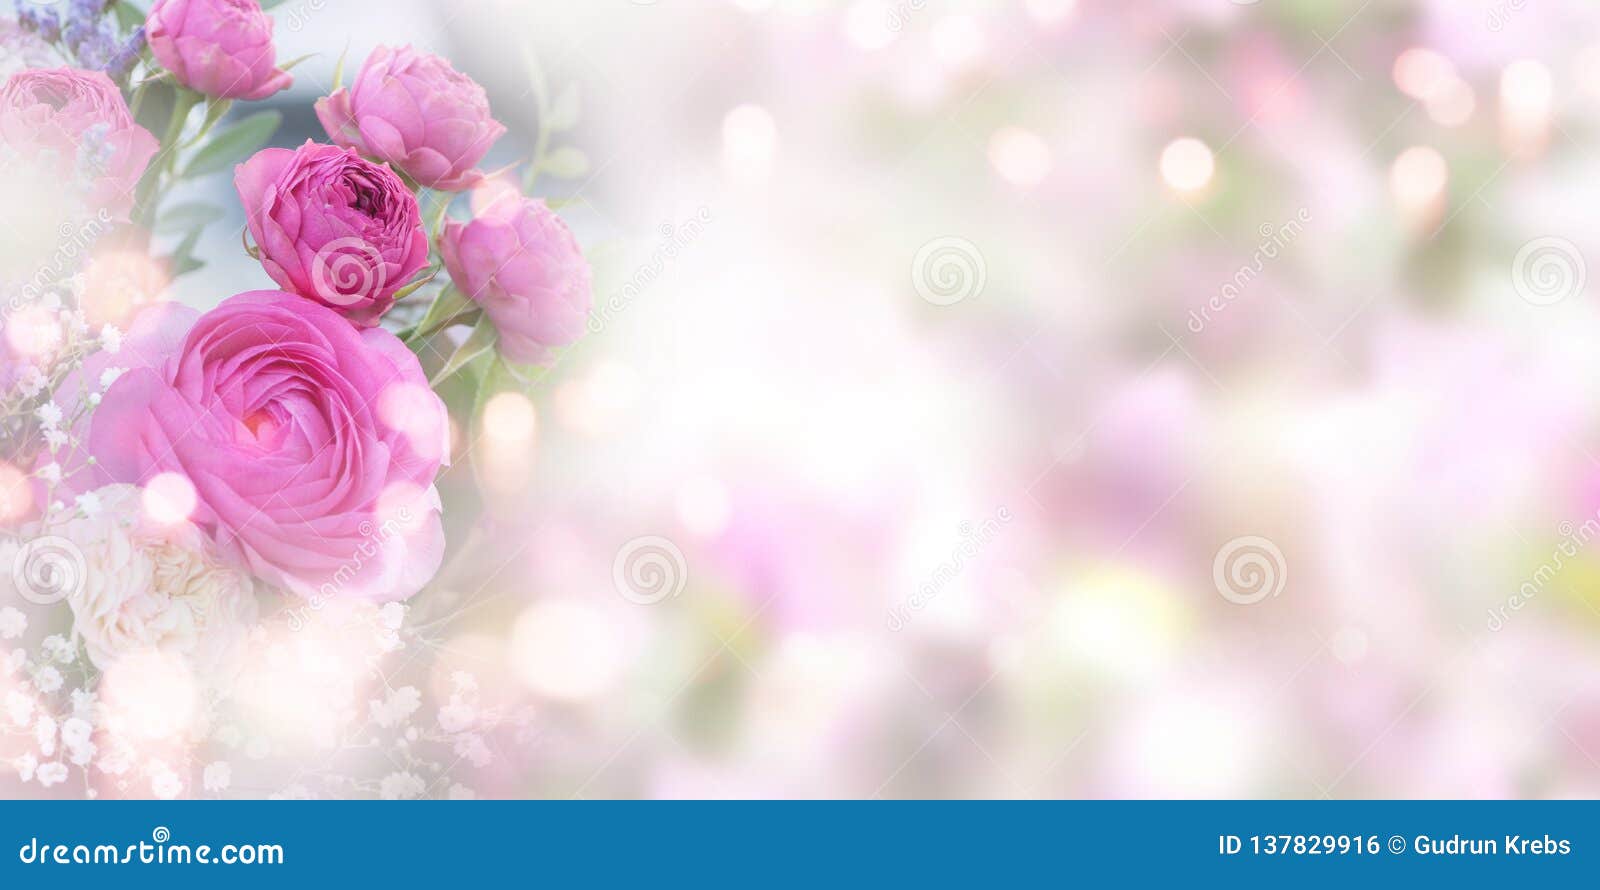 tender pink roses background